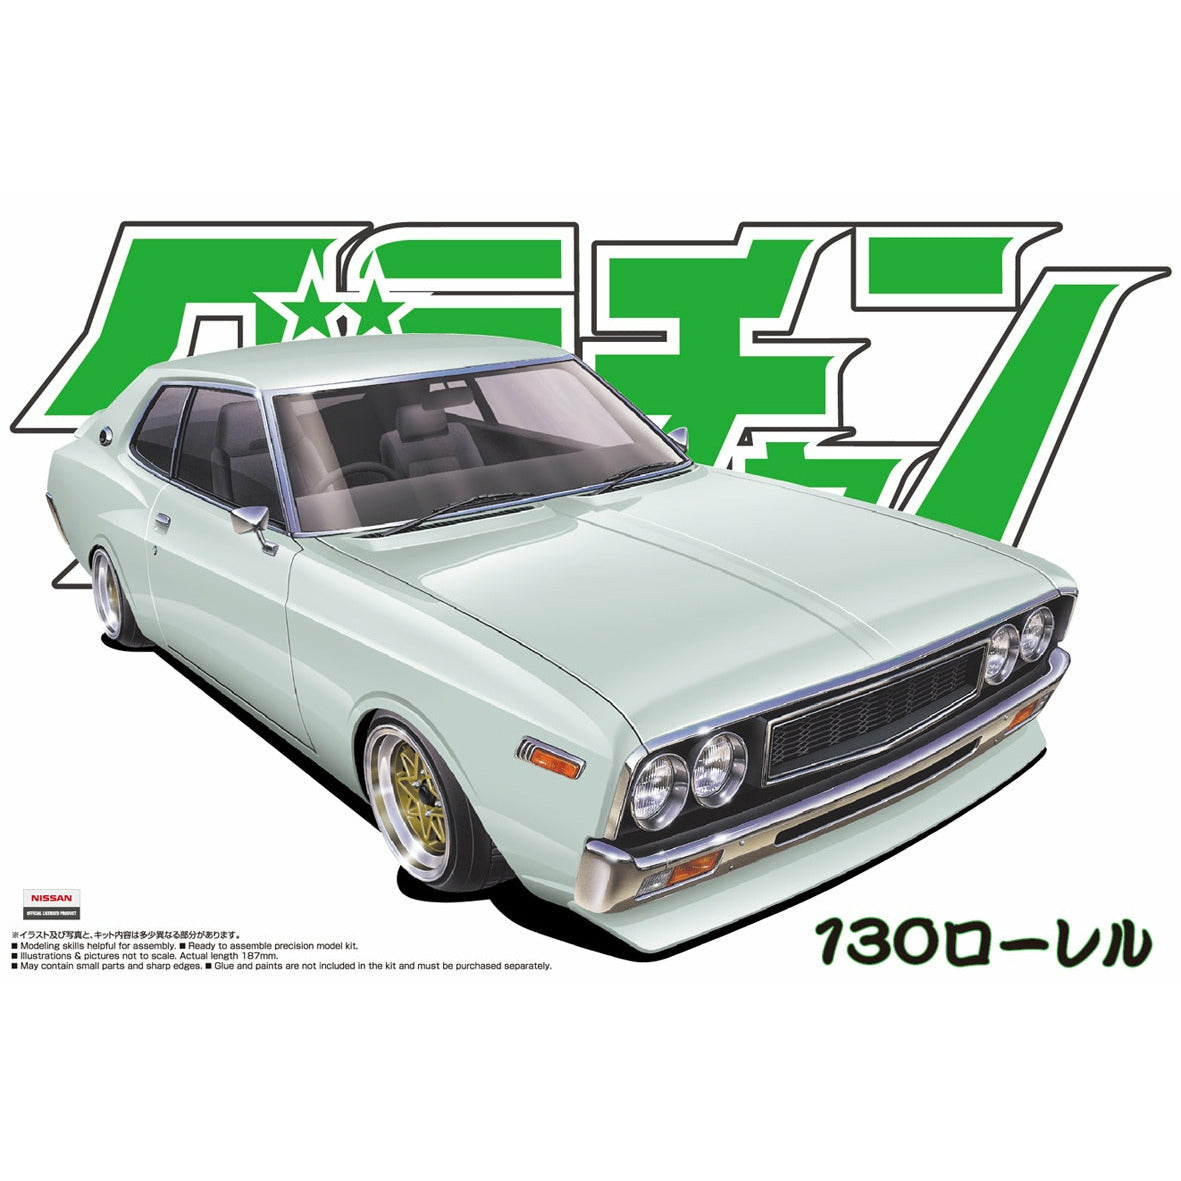 Laurel HT 2000SGX (Nissan) 1/24 Model Car Kit #4275 by Aoshima